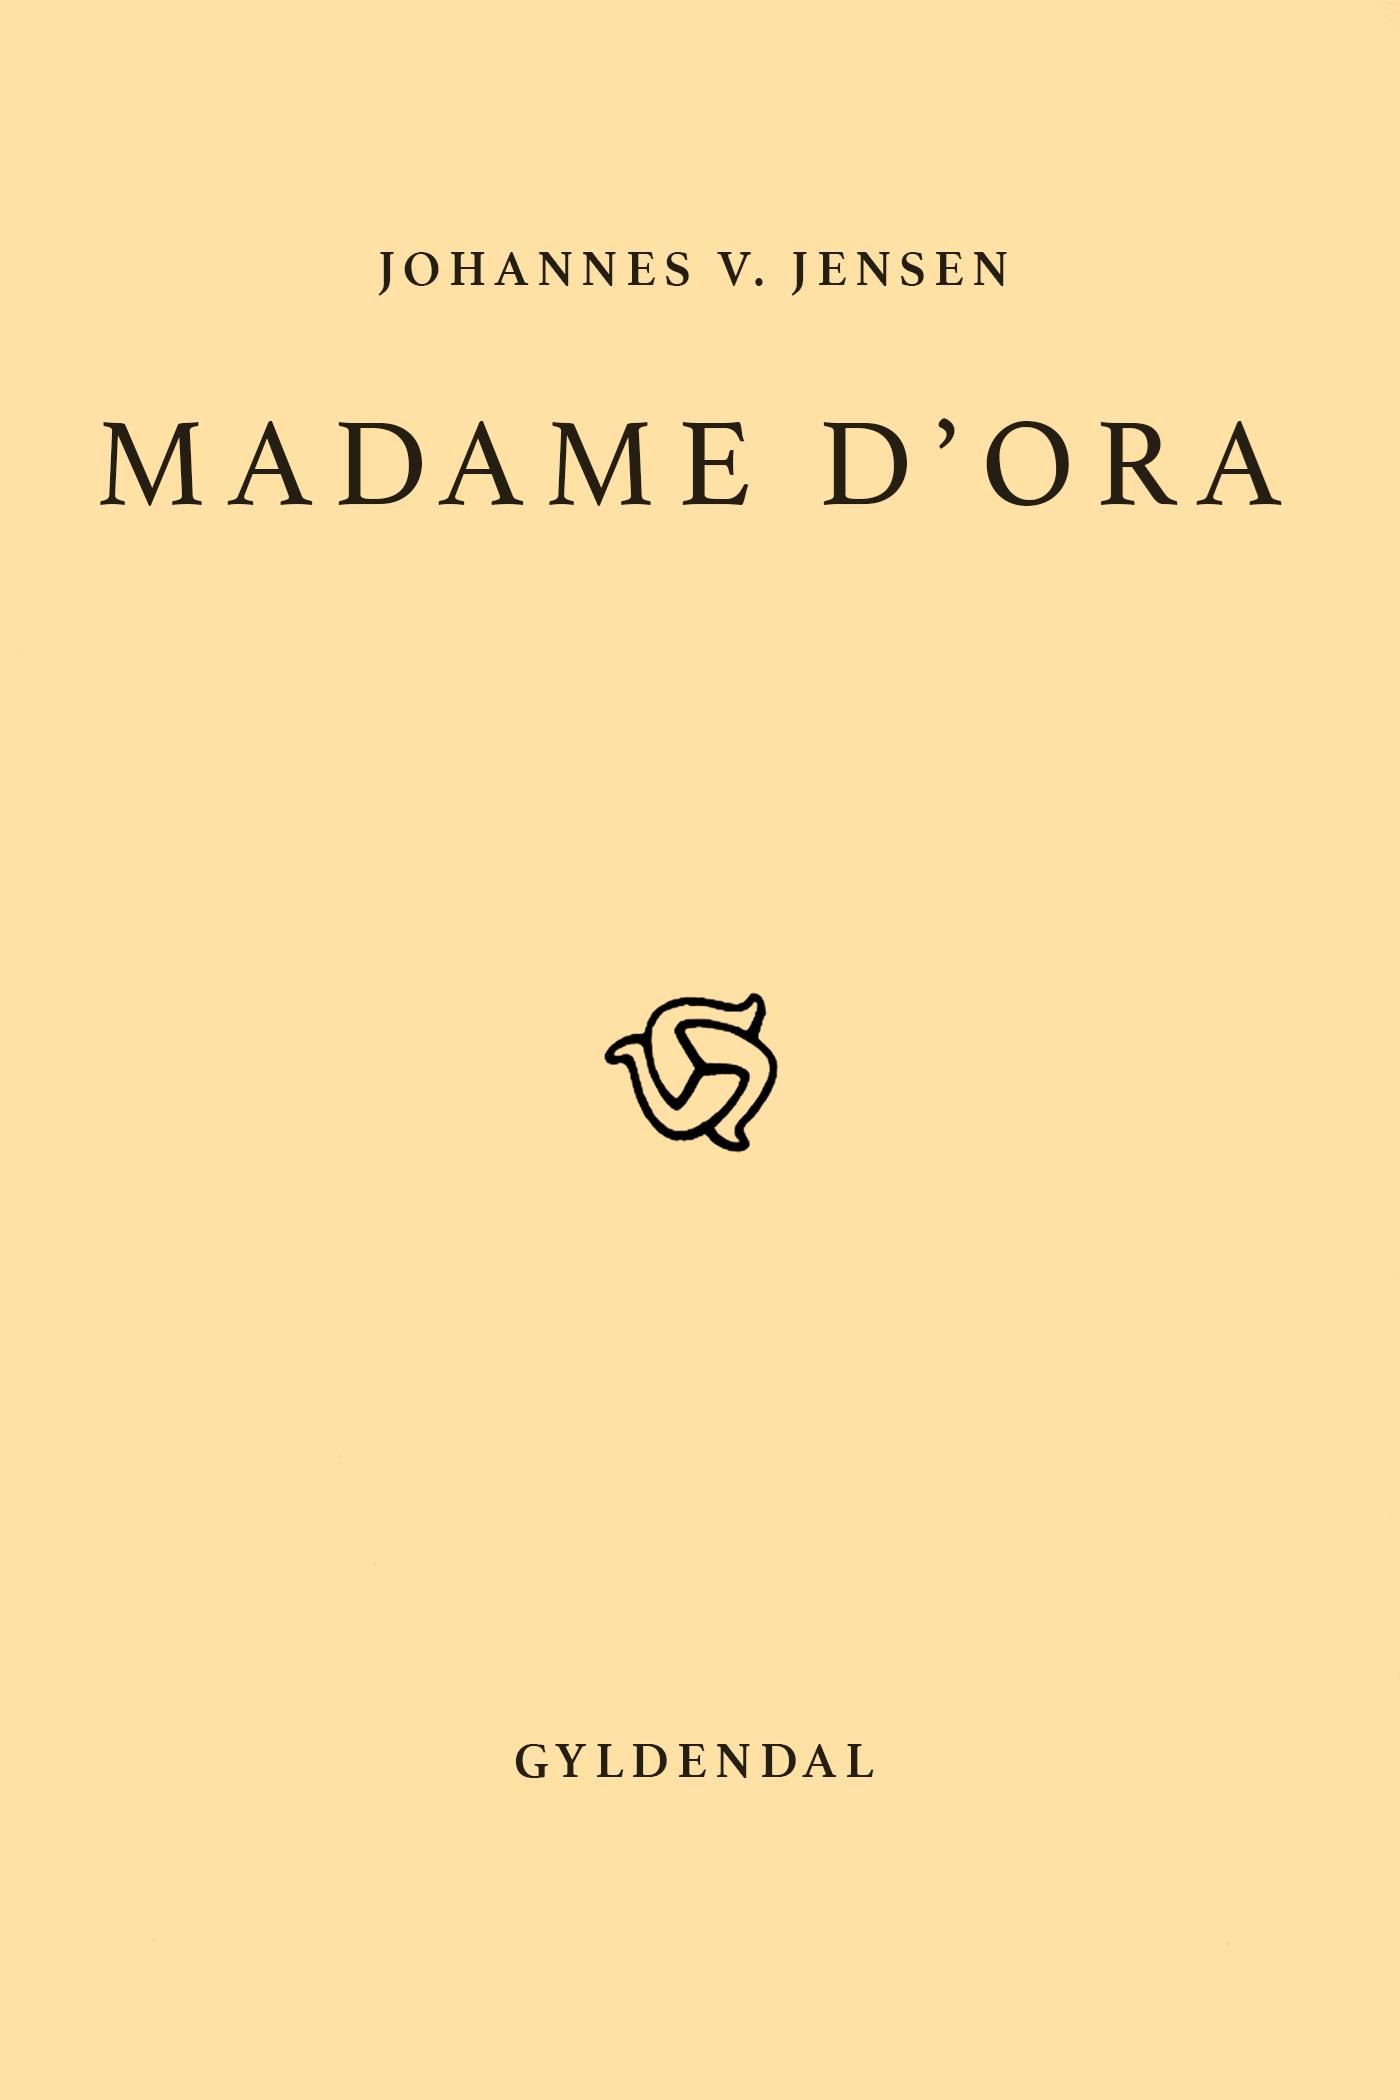 Madame D'Ora, eBook by Johannes V. Jensen